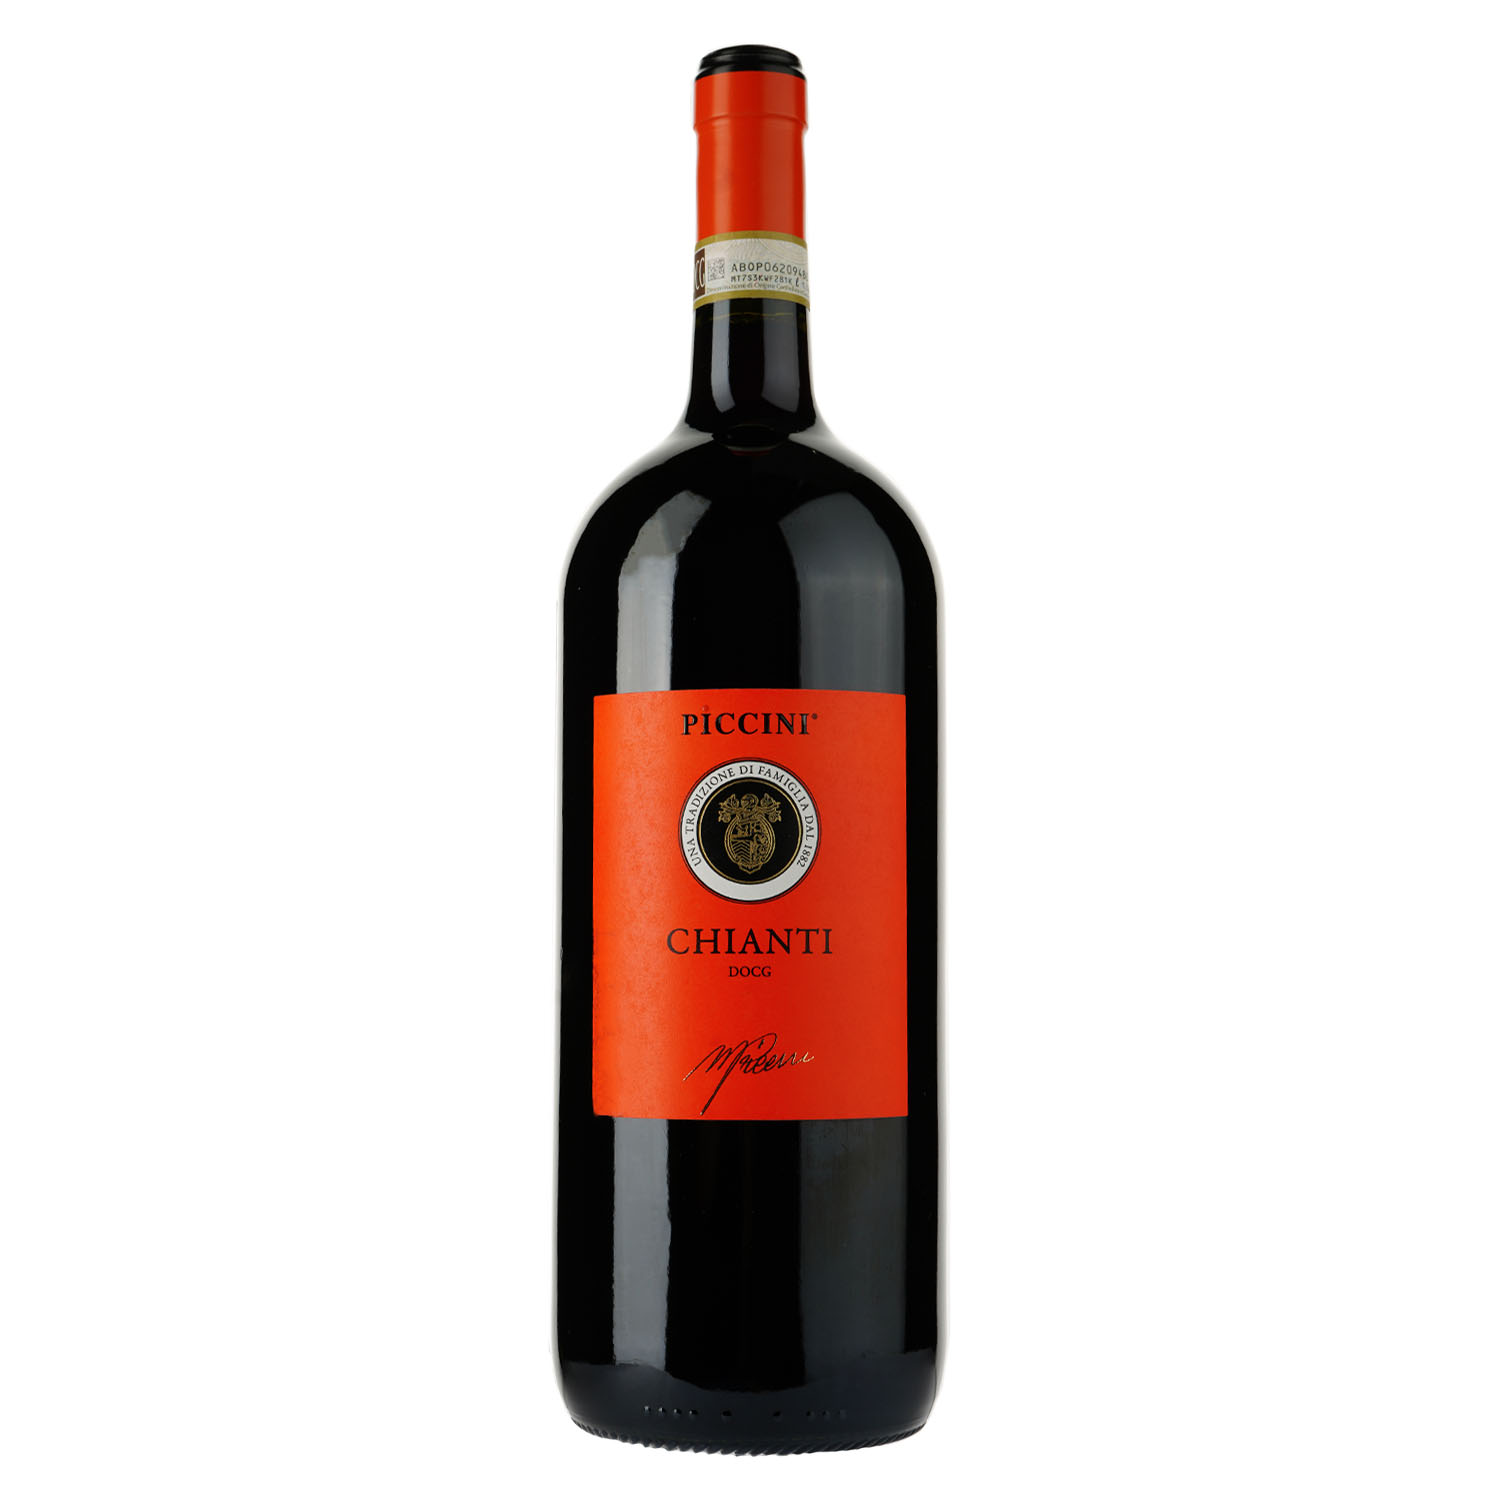 Вино Piccini Chianti DOCG, червоне, сухе, 12,5%, 1,5 л (502318) - фото 1